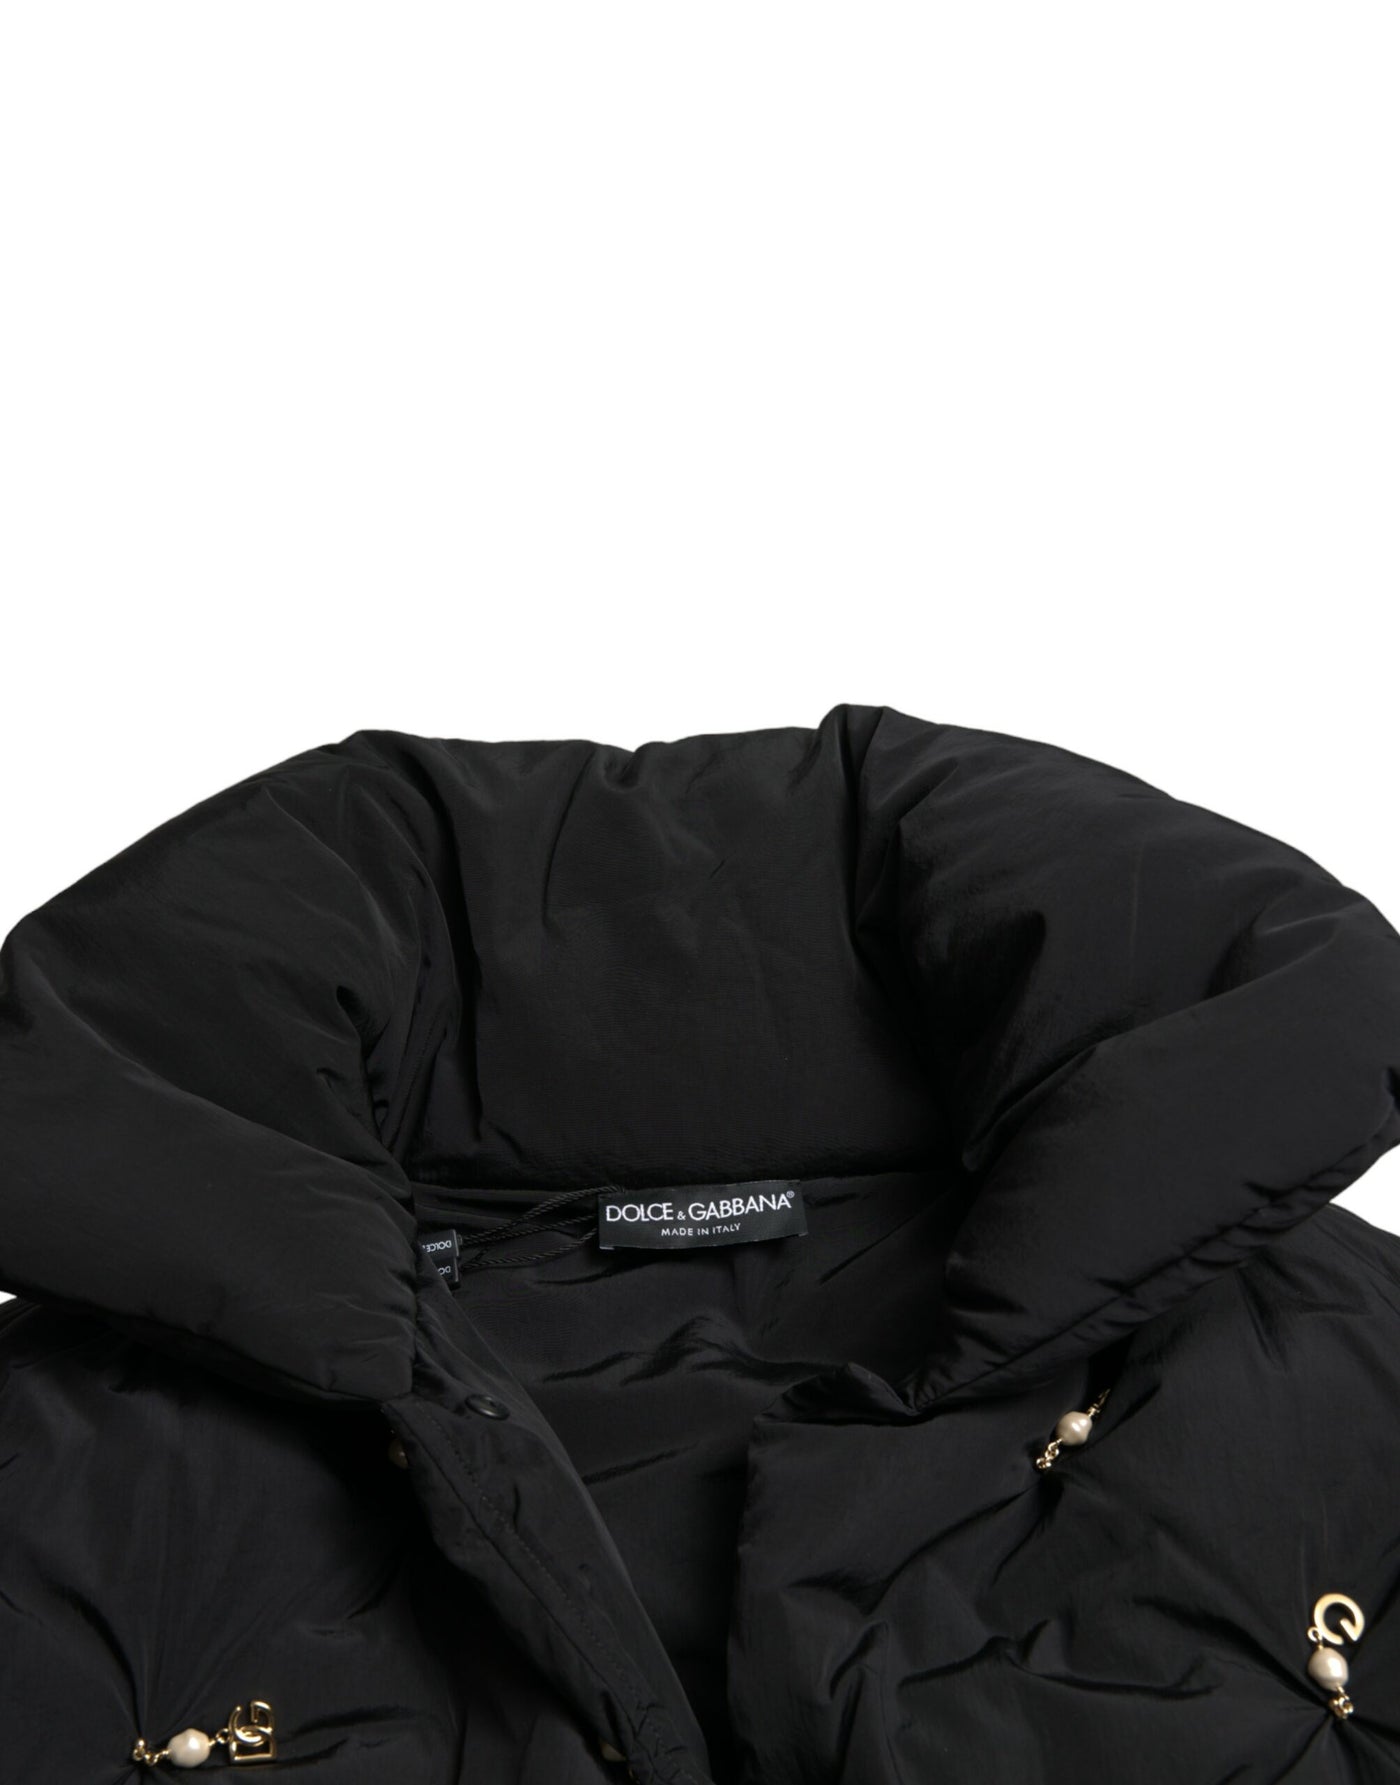 Dolce & Gabbana Black Embellished Quilted Shell Bomber Jacket